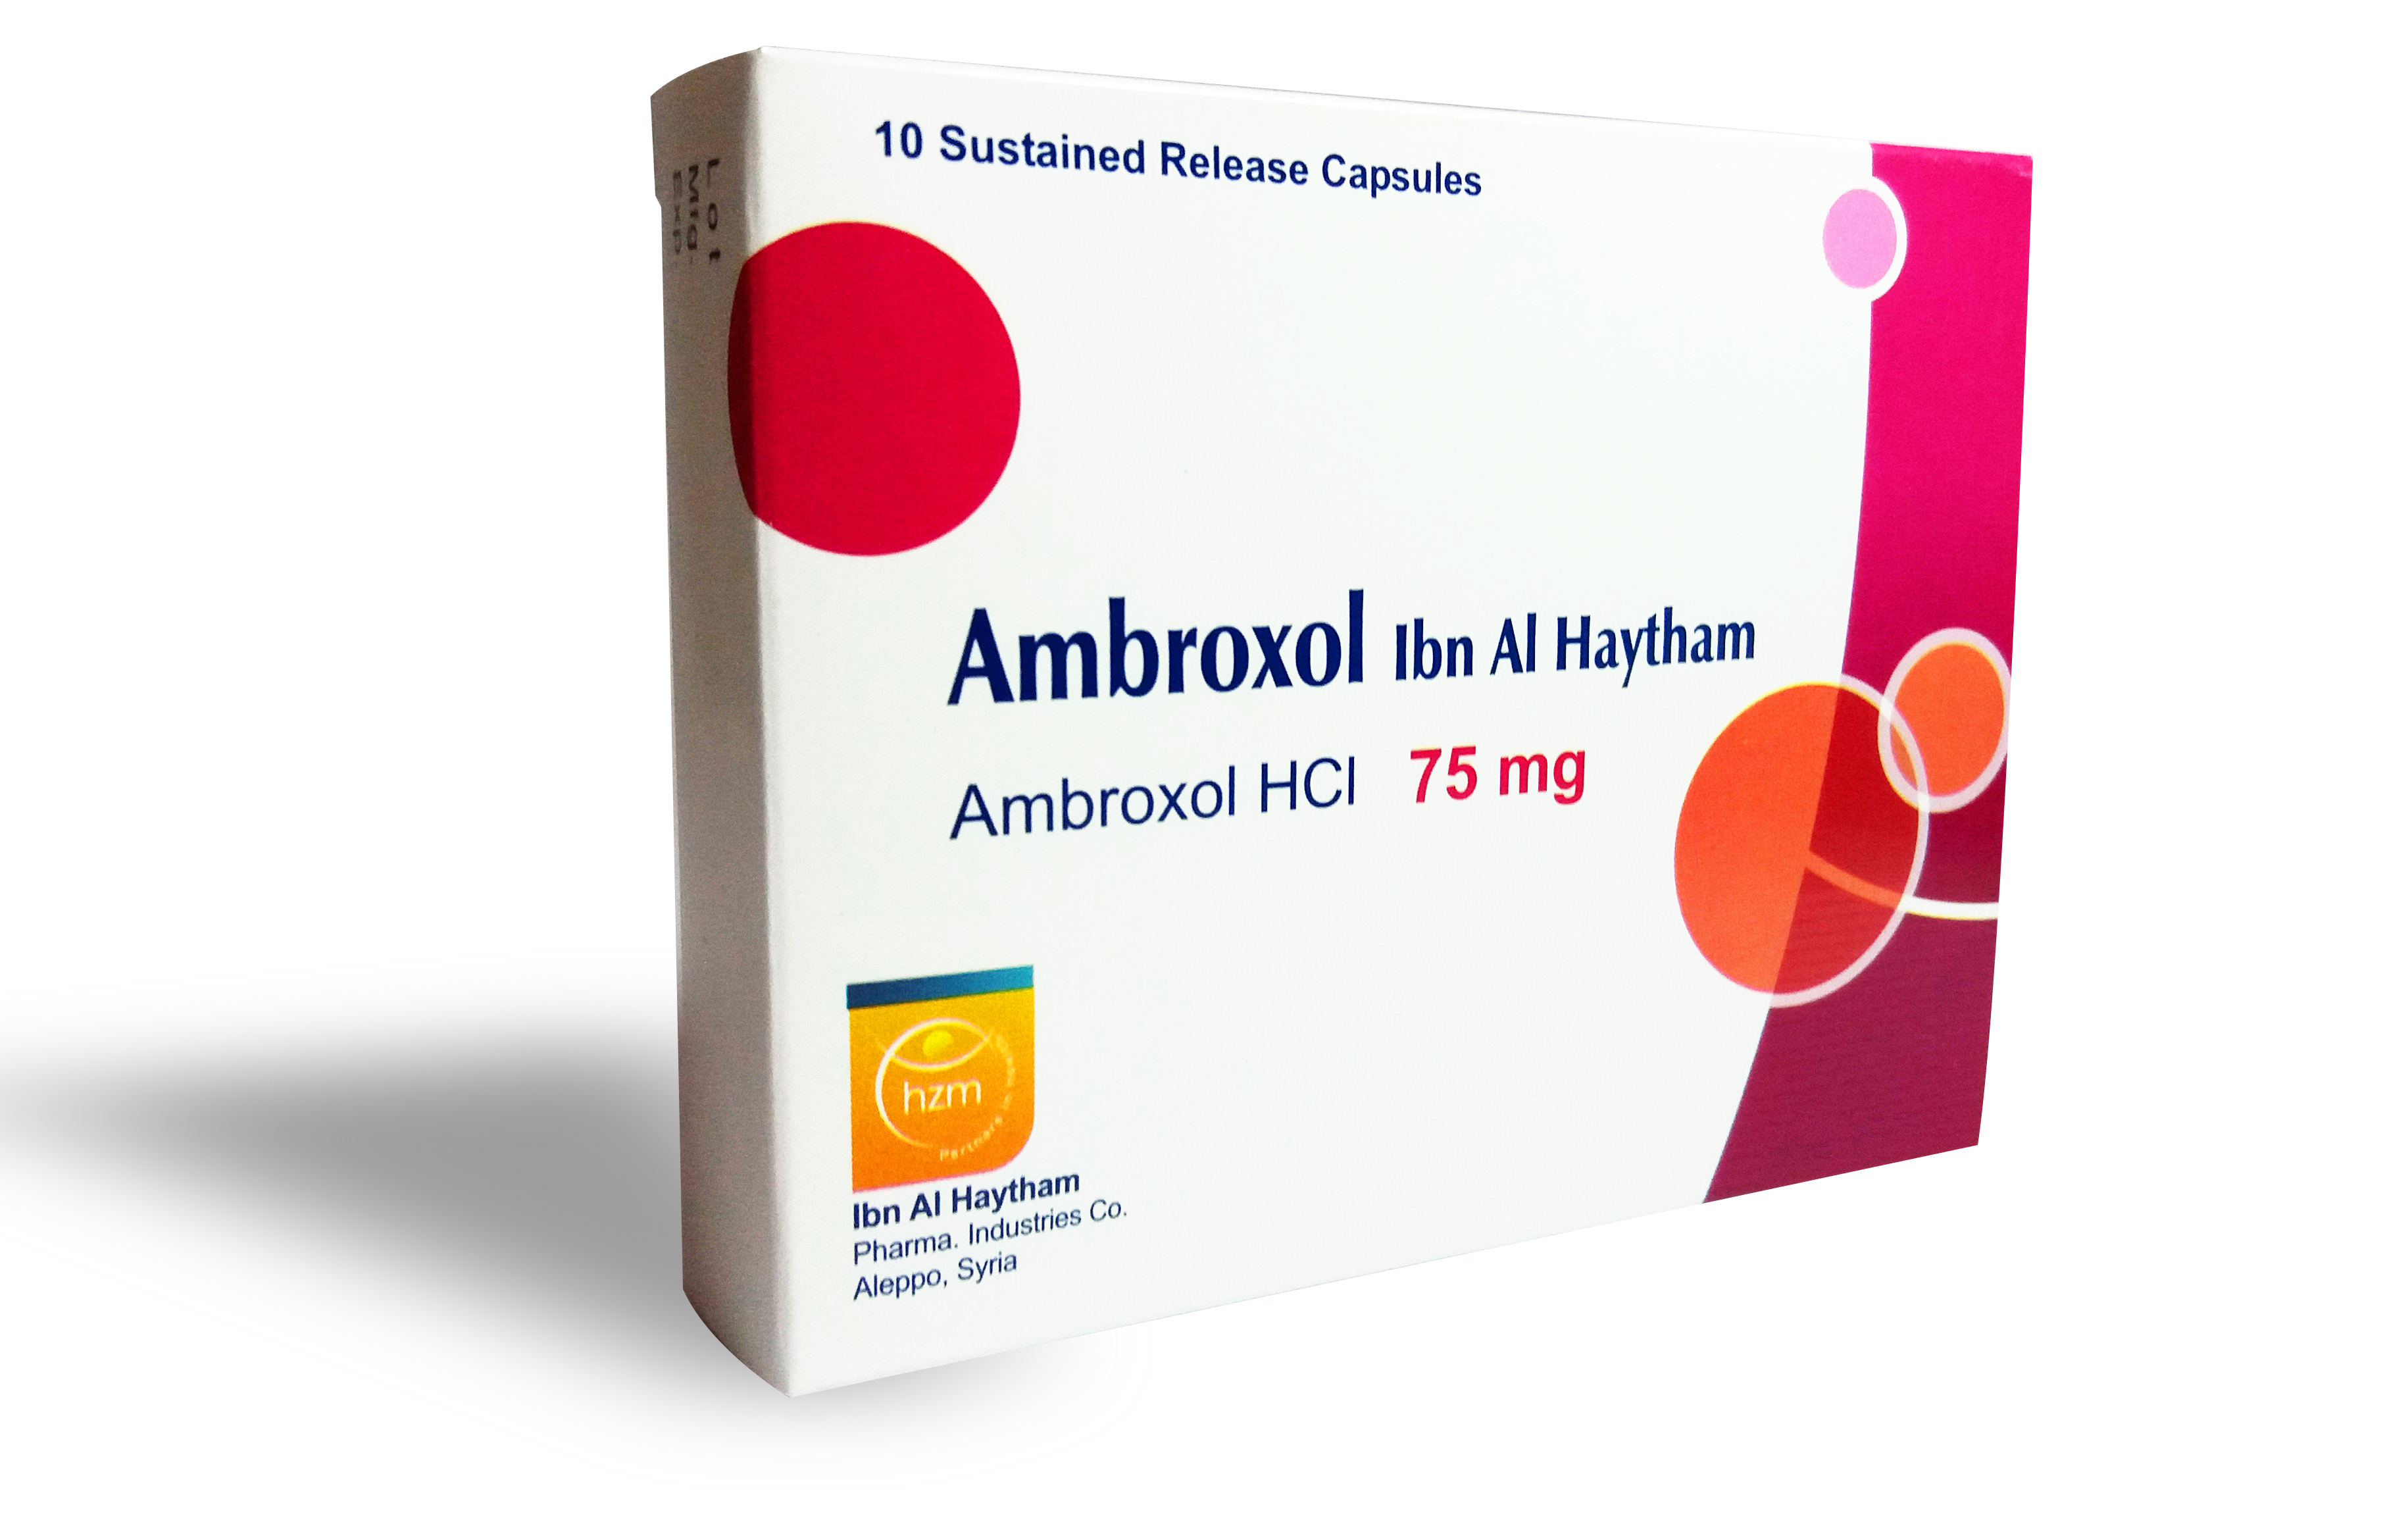 Ambroxol Ibn Al Haytham 75 mg  Capsules